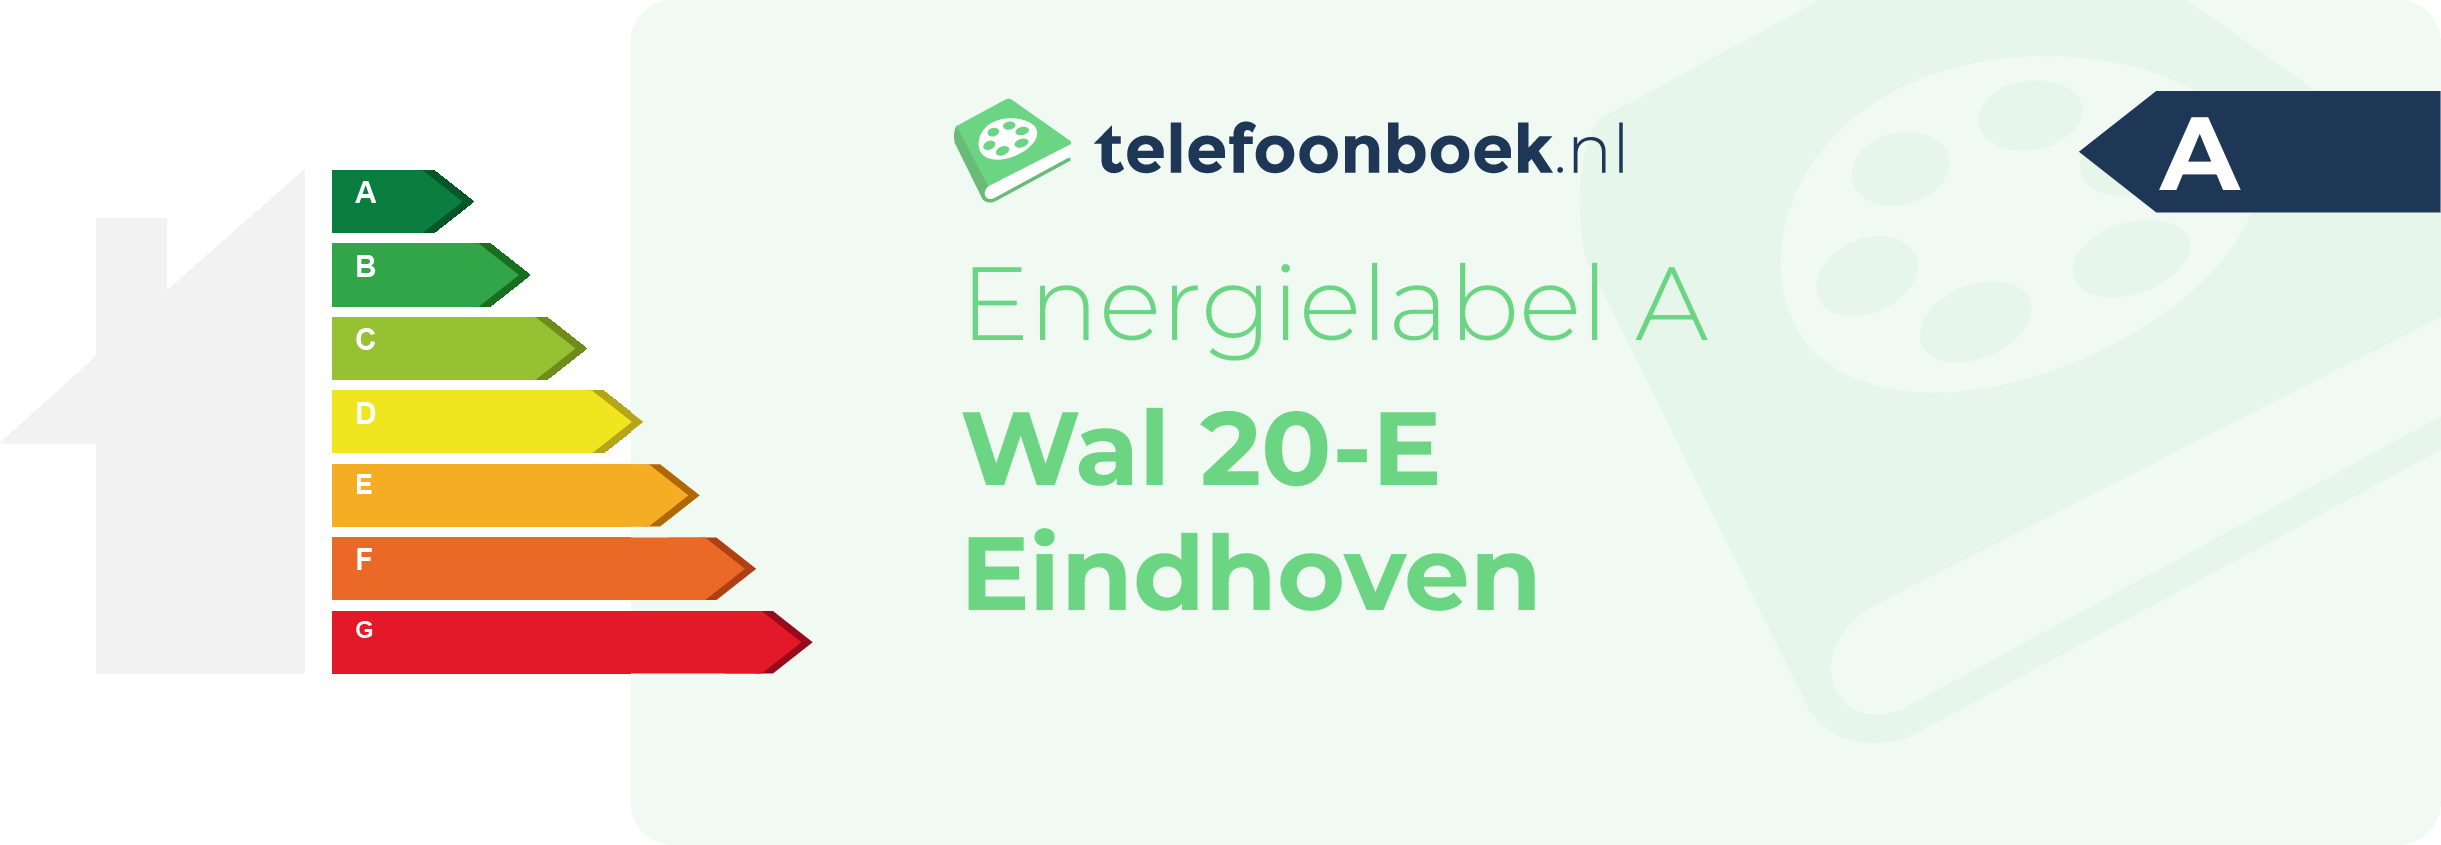 Energielabel Wal 20-E Eindhoven